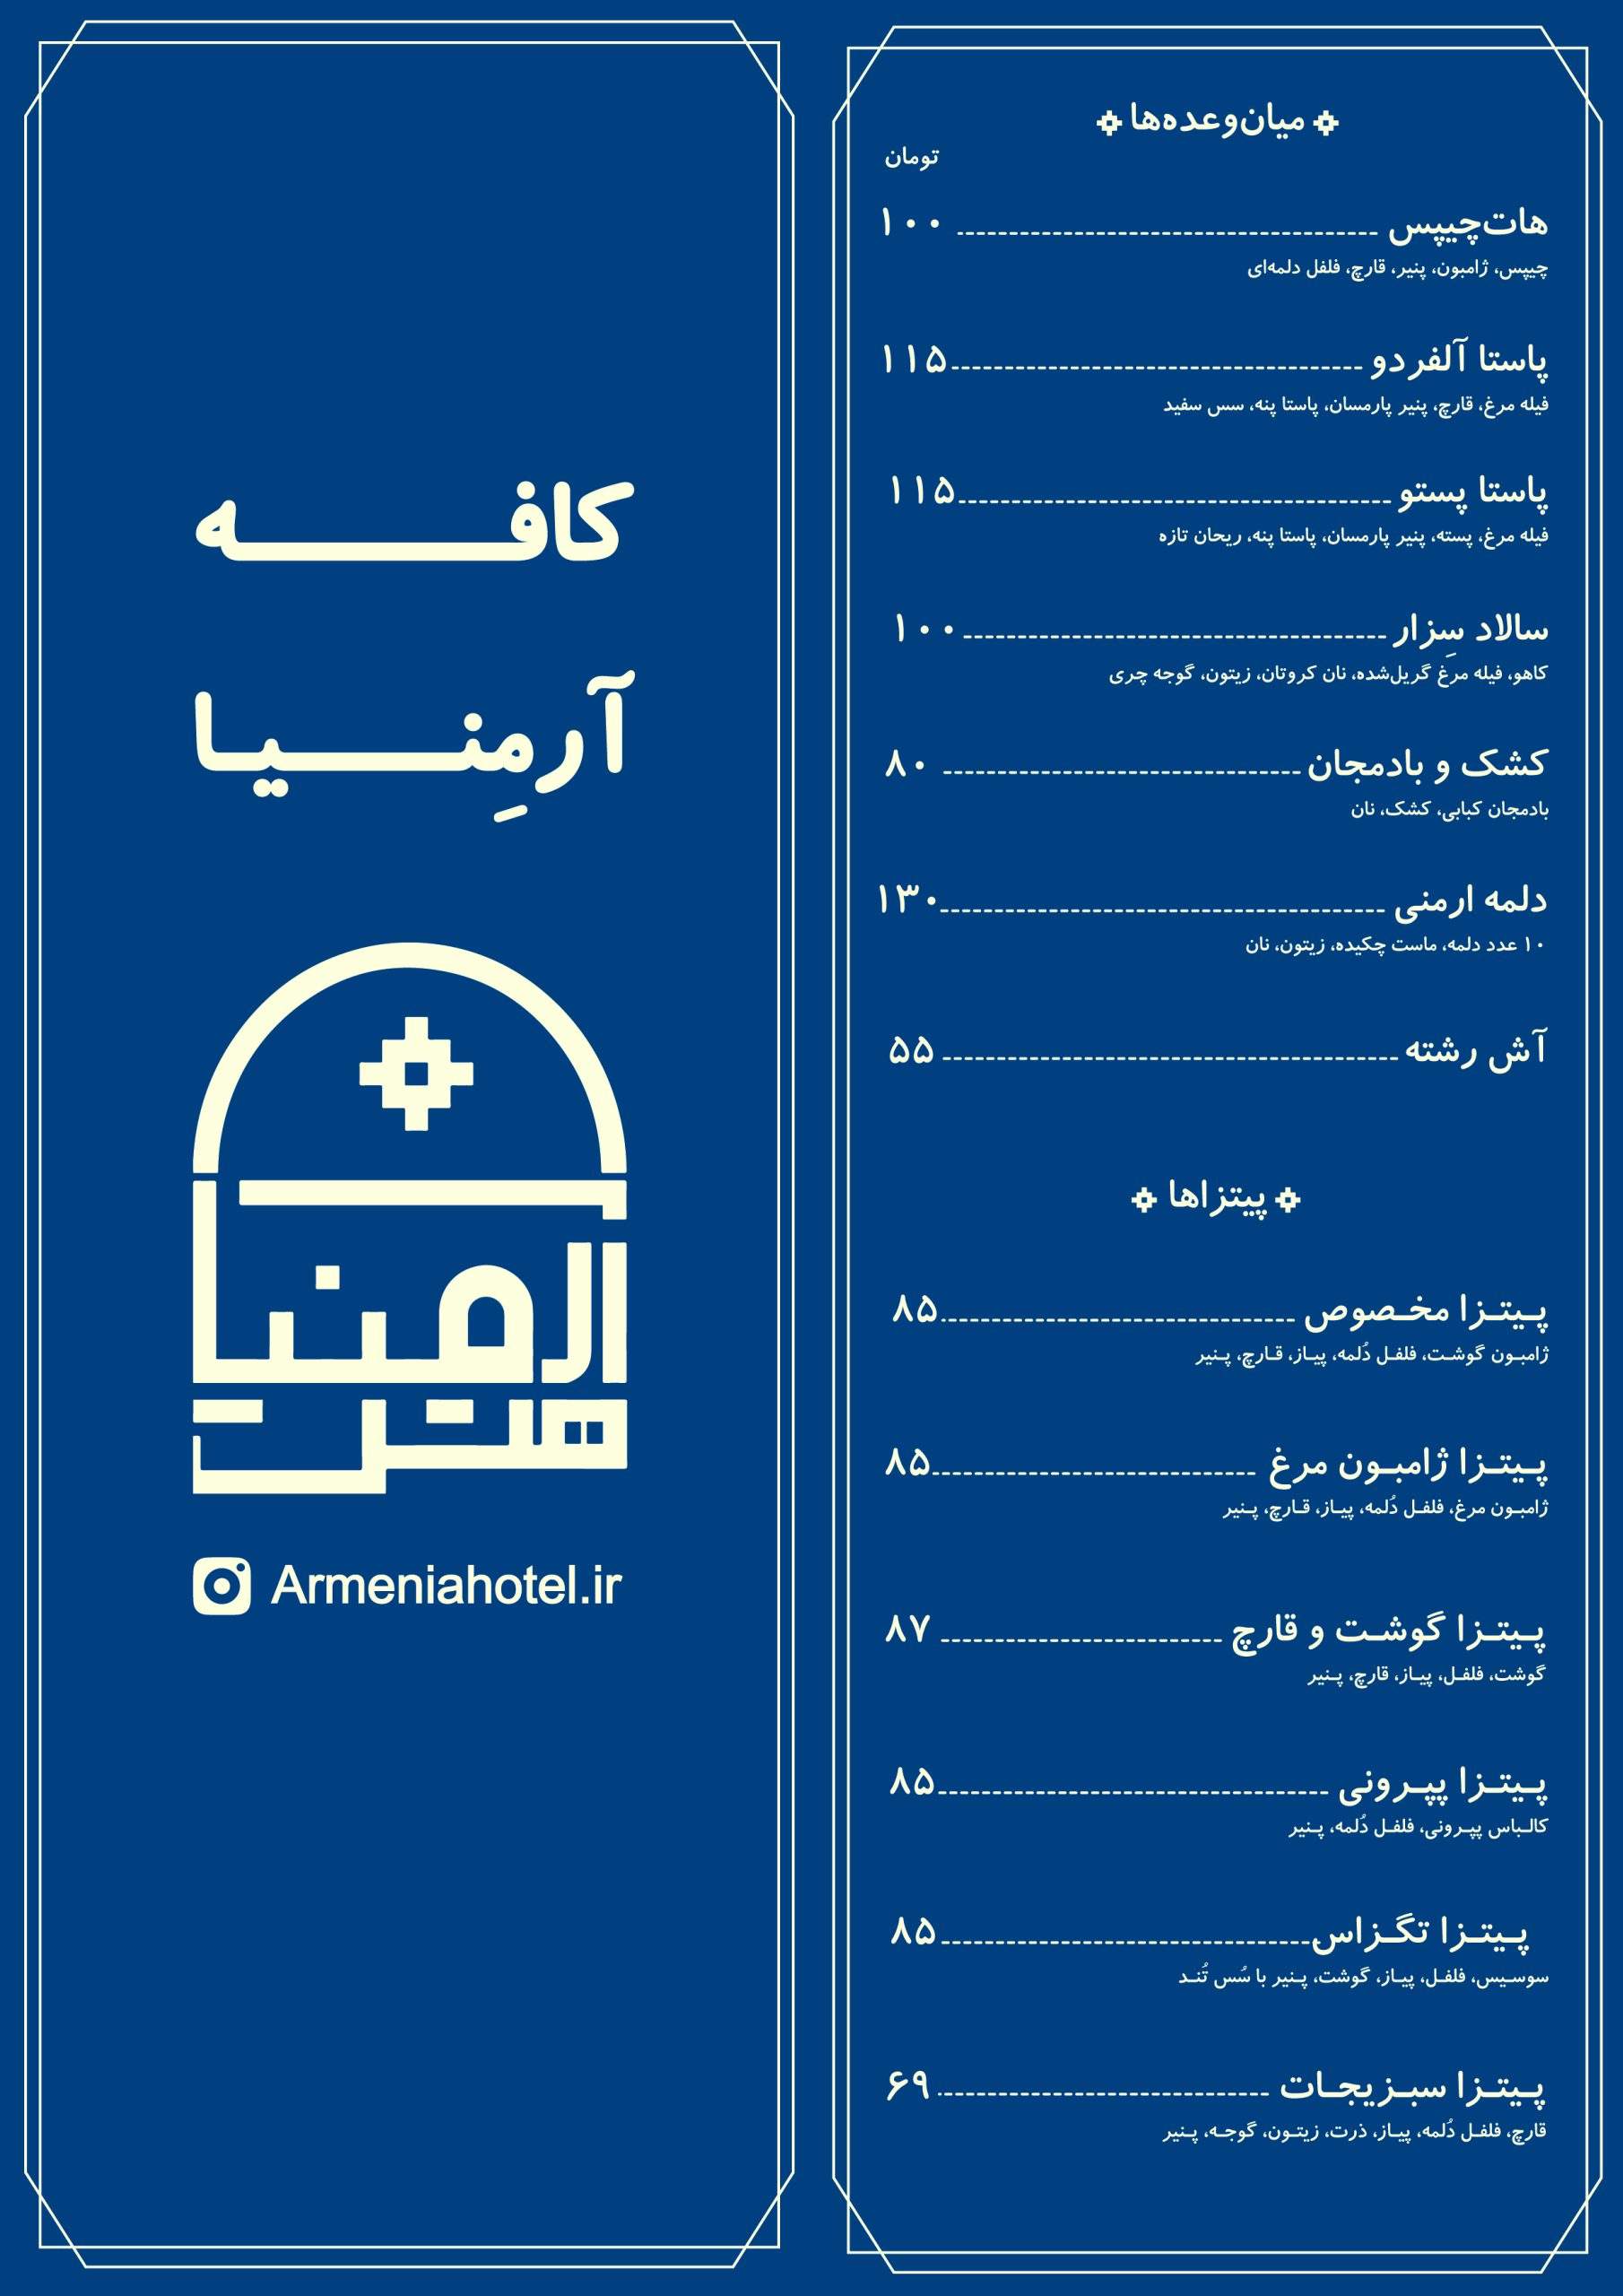 hotel armenia menu 2 copy